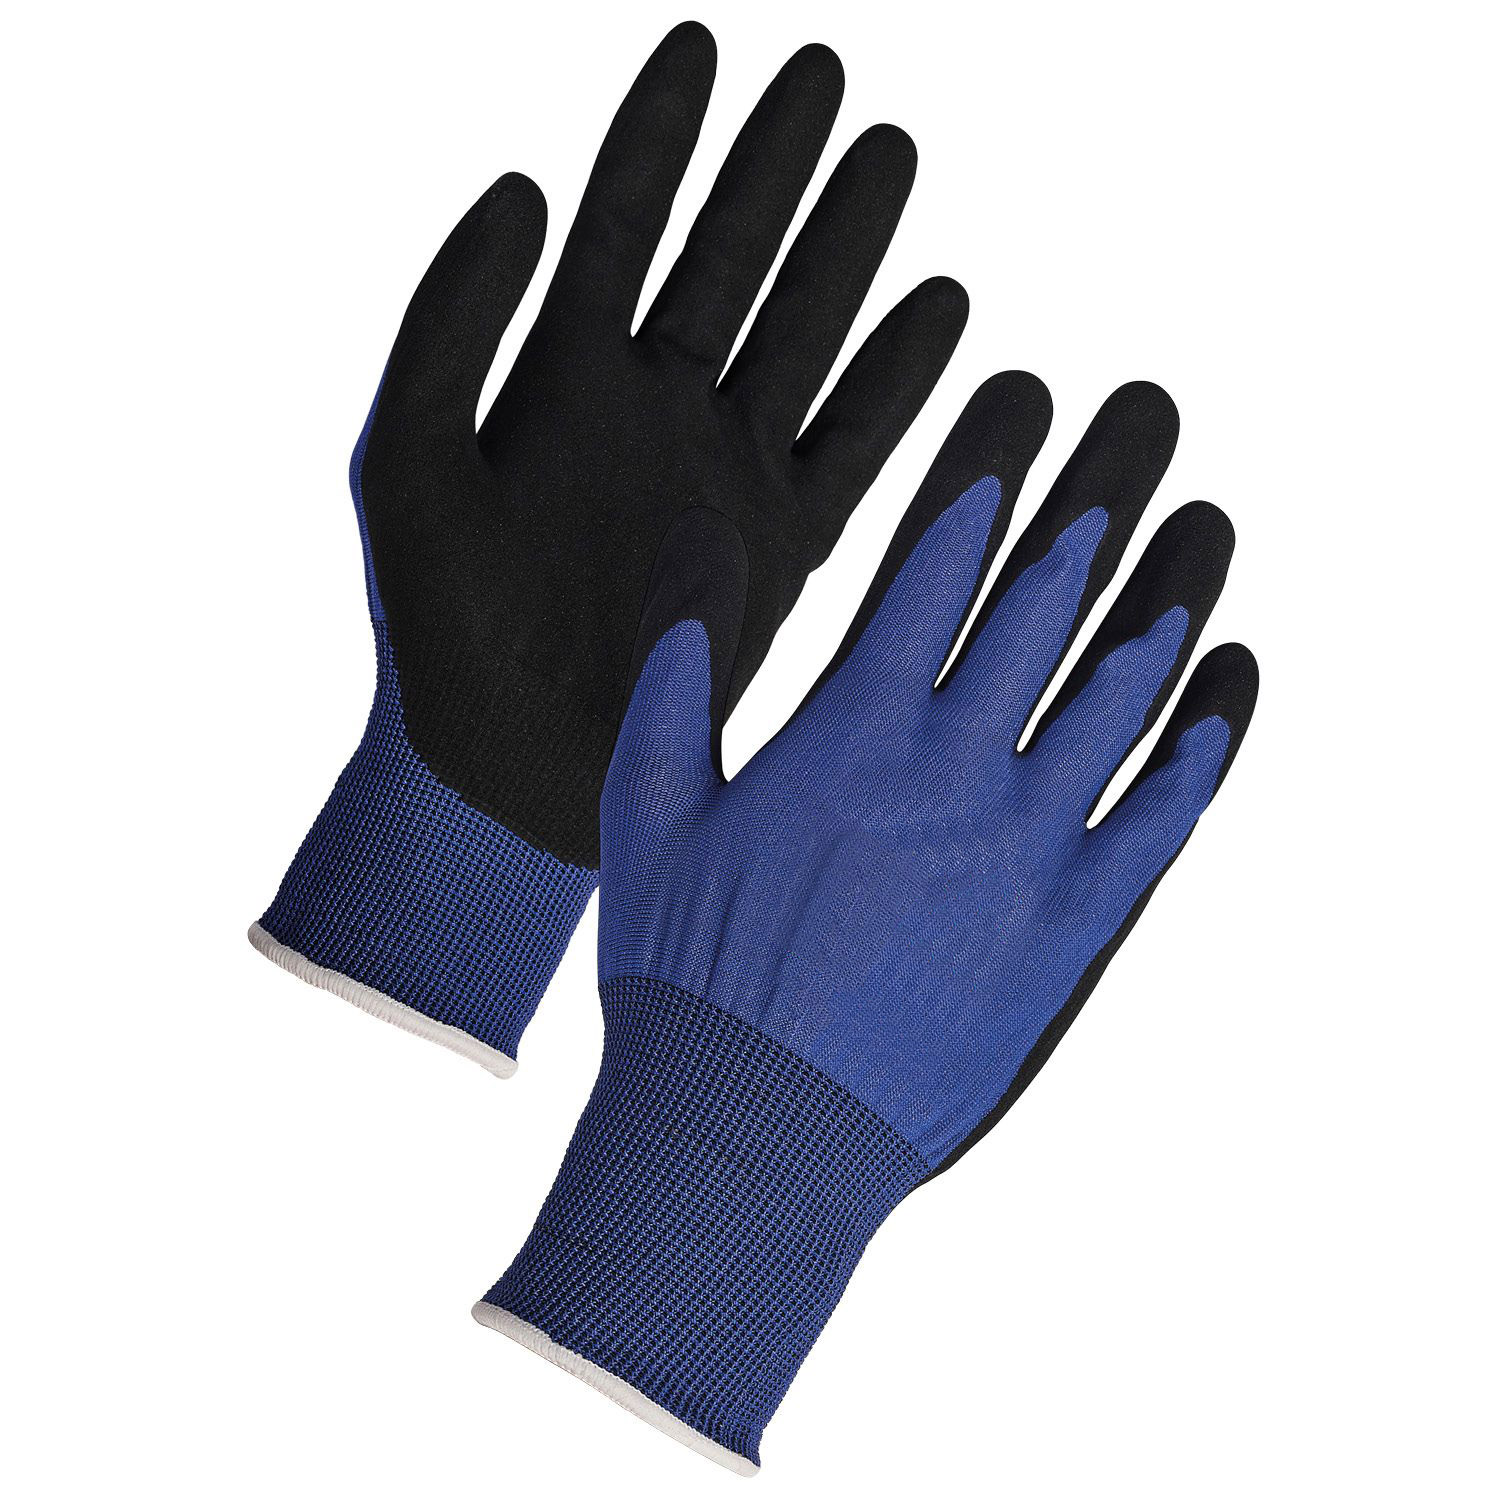 Ultra Thin Cut Resistant Glove